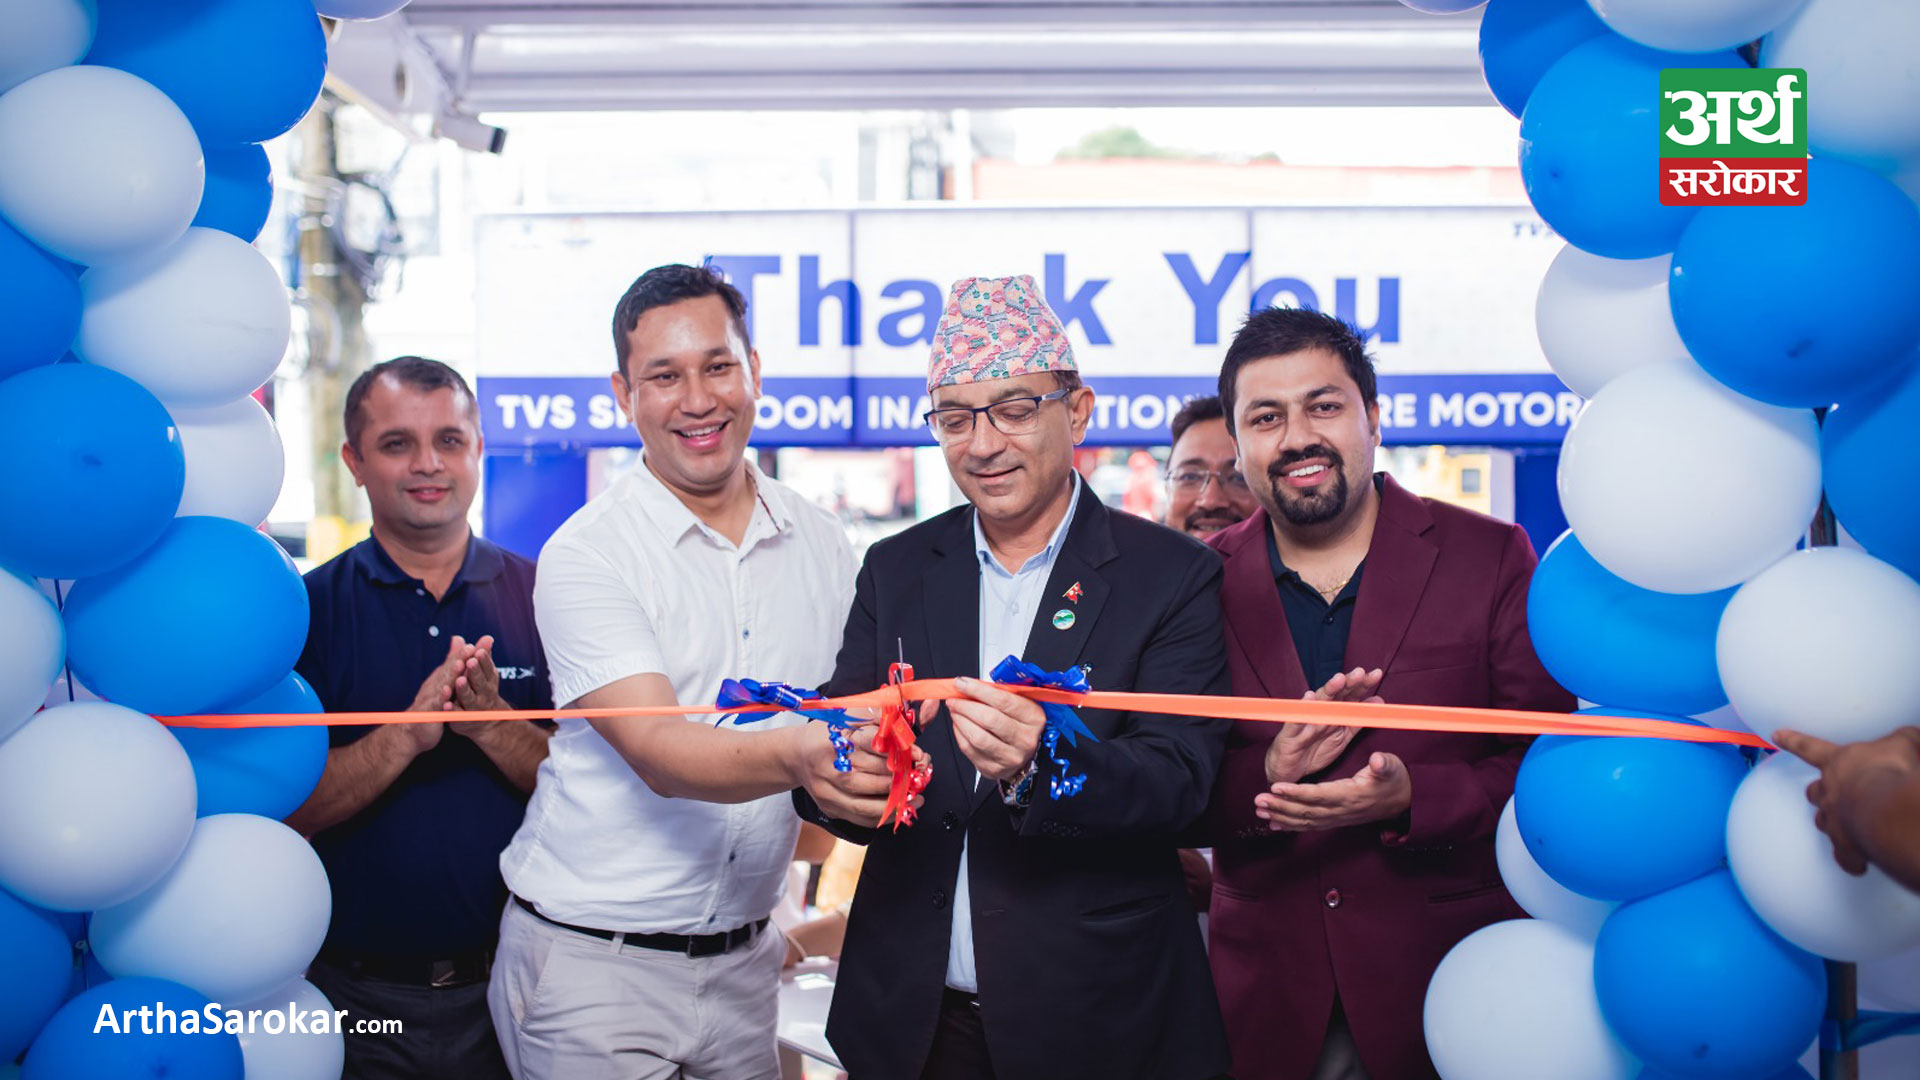 Square Motors inaugurates the new TVS showroom in Pokhara